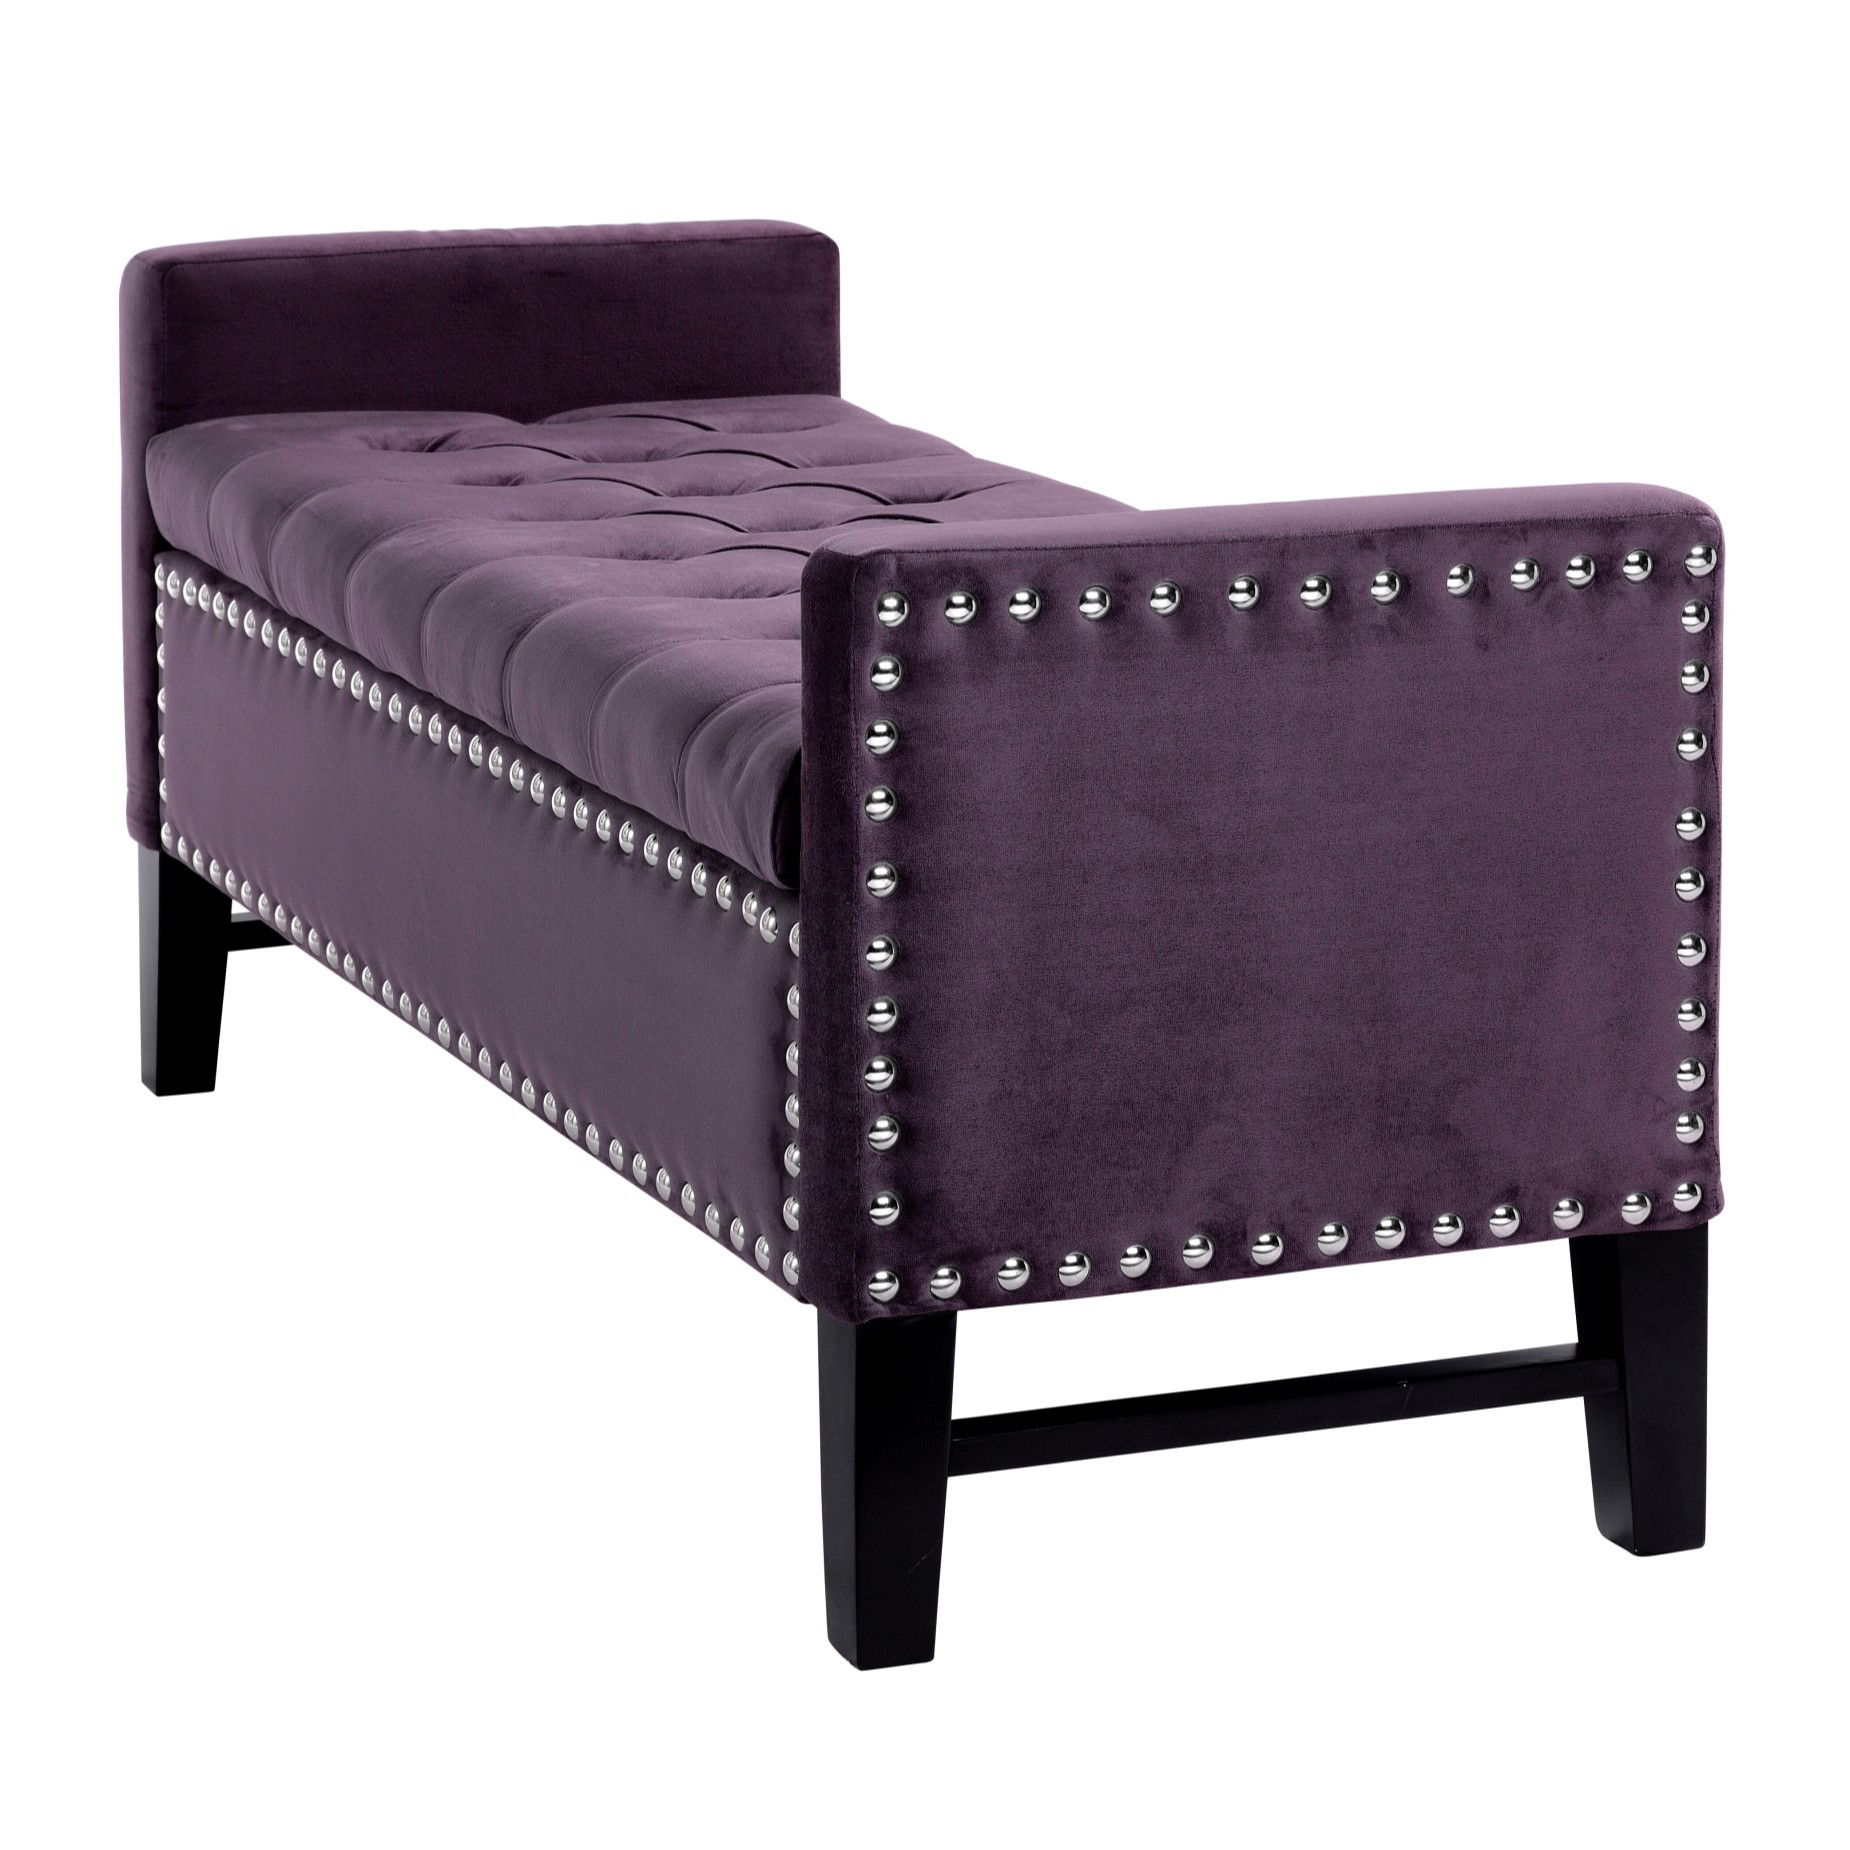 50" Plum and Black Upholstered Velvet Bench with Flip top, Shoe Storage-530657-1